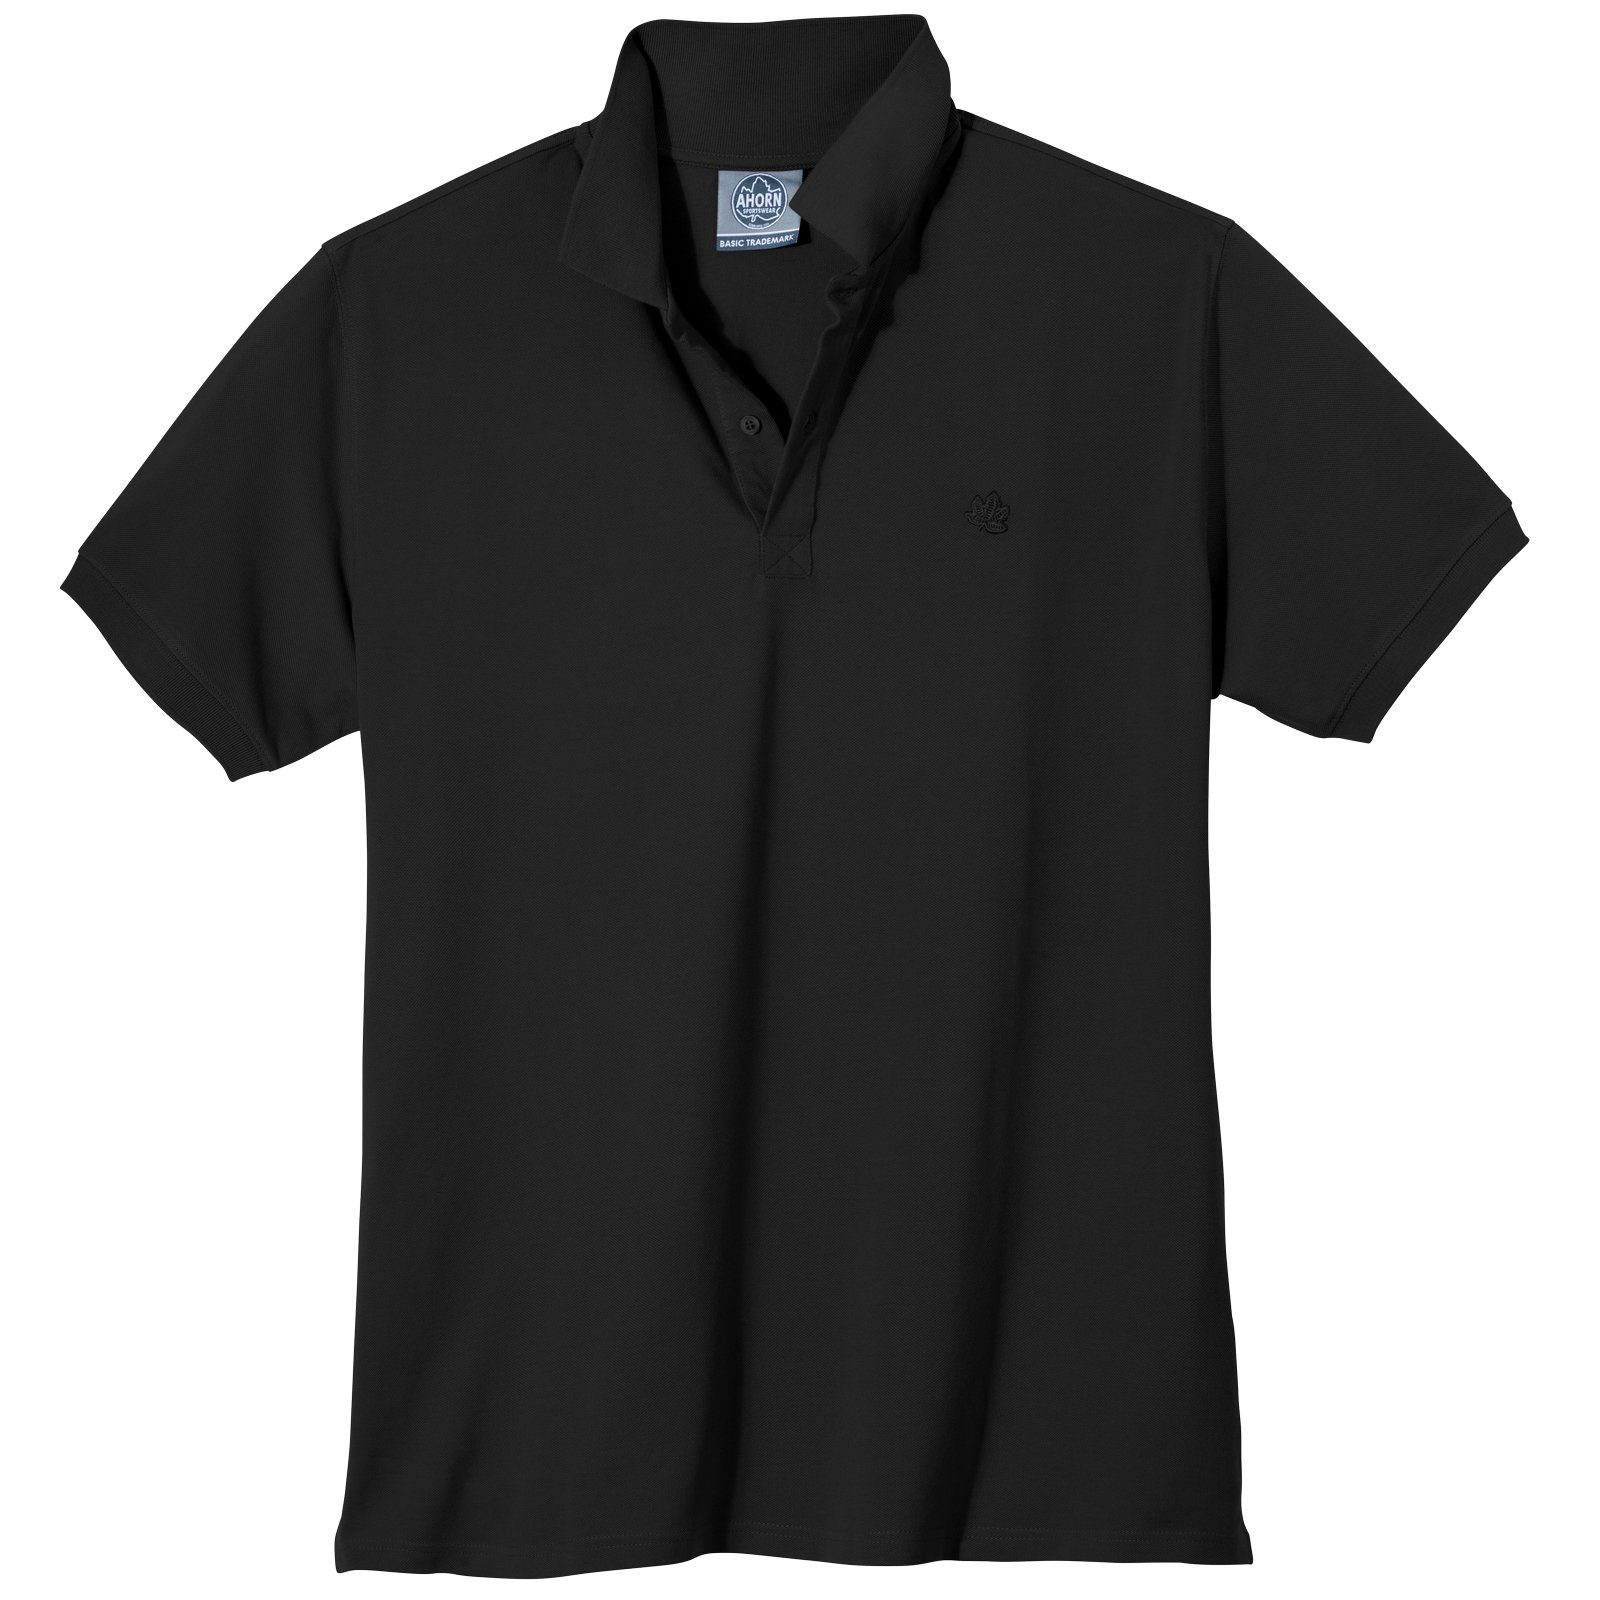 AHORN SPORTSWEAR Poloshirt Große Größen Herren Poloshirt Ahorn Sportswear schwarz | Poloshirts